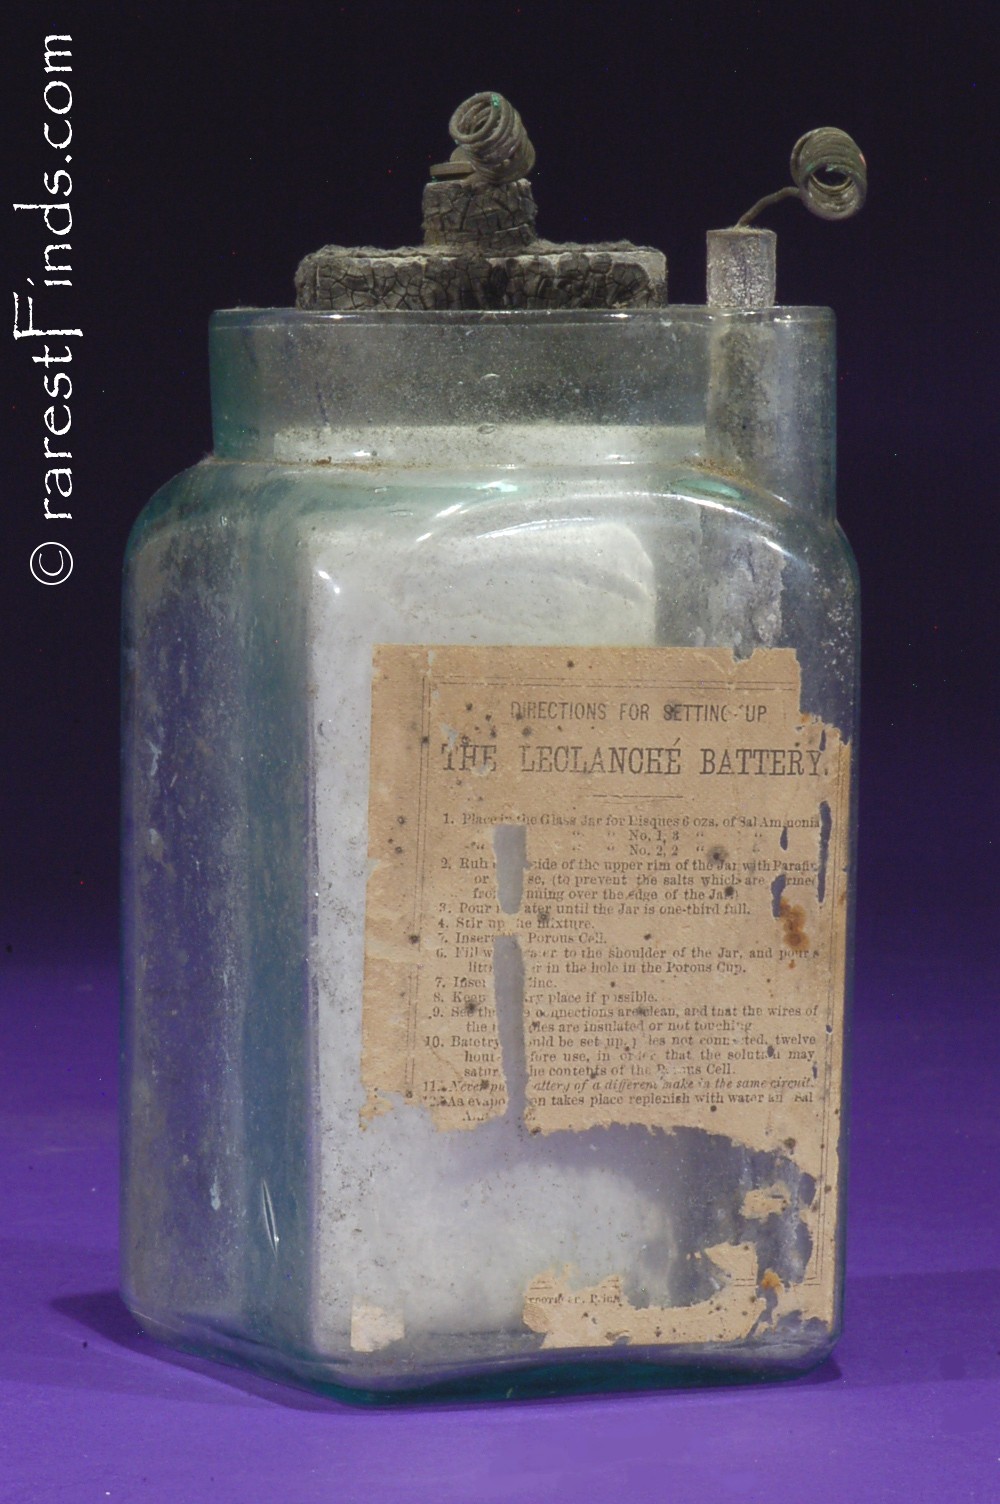 Early-Leclanche-Glass-Jar-Batttery-1866